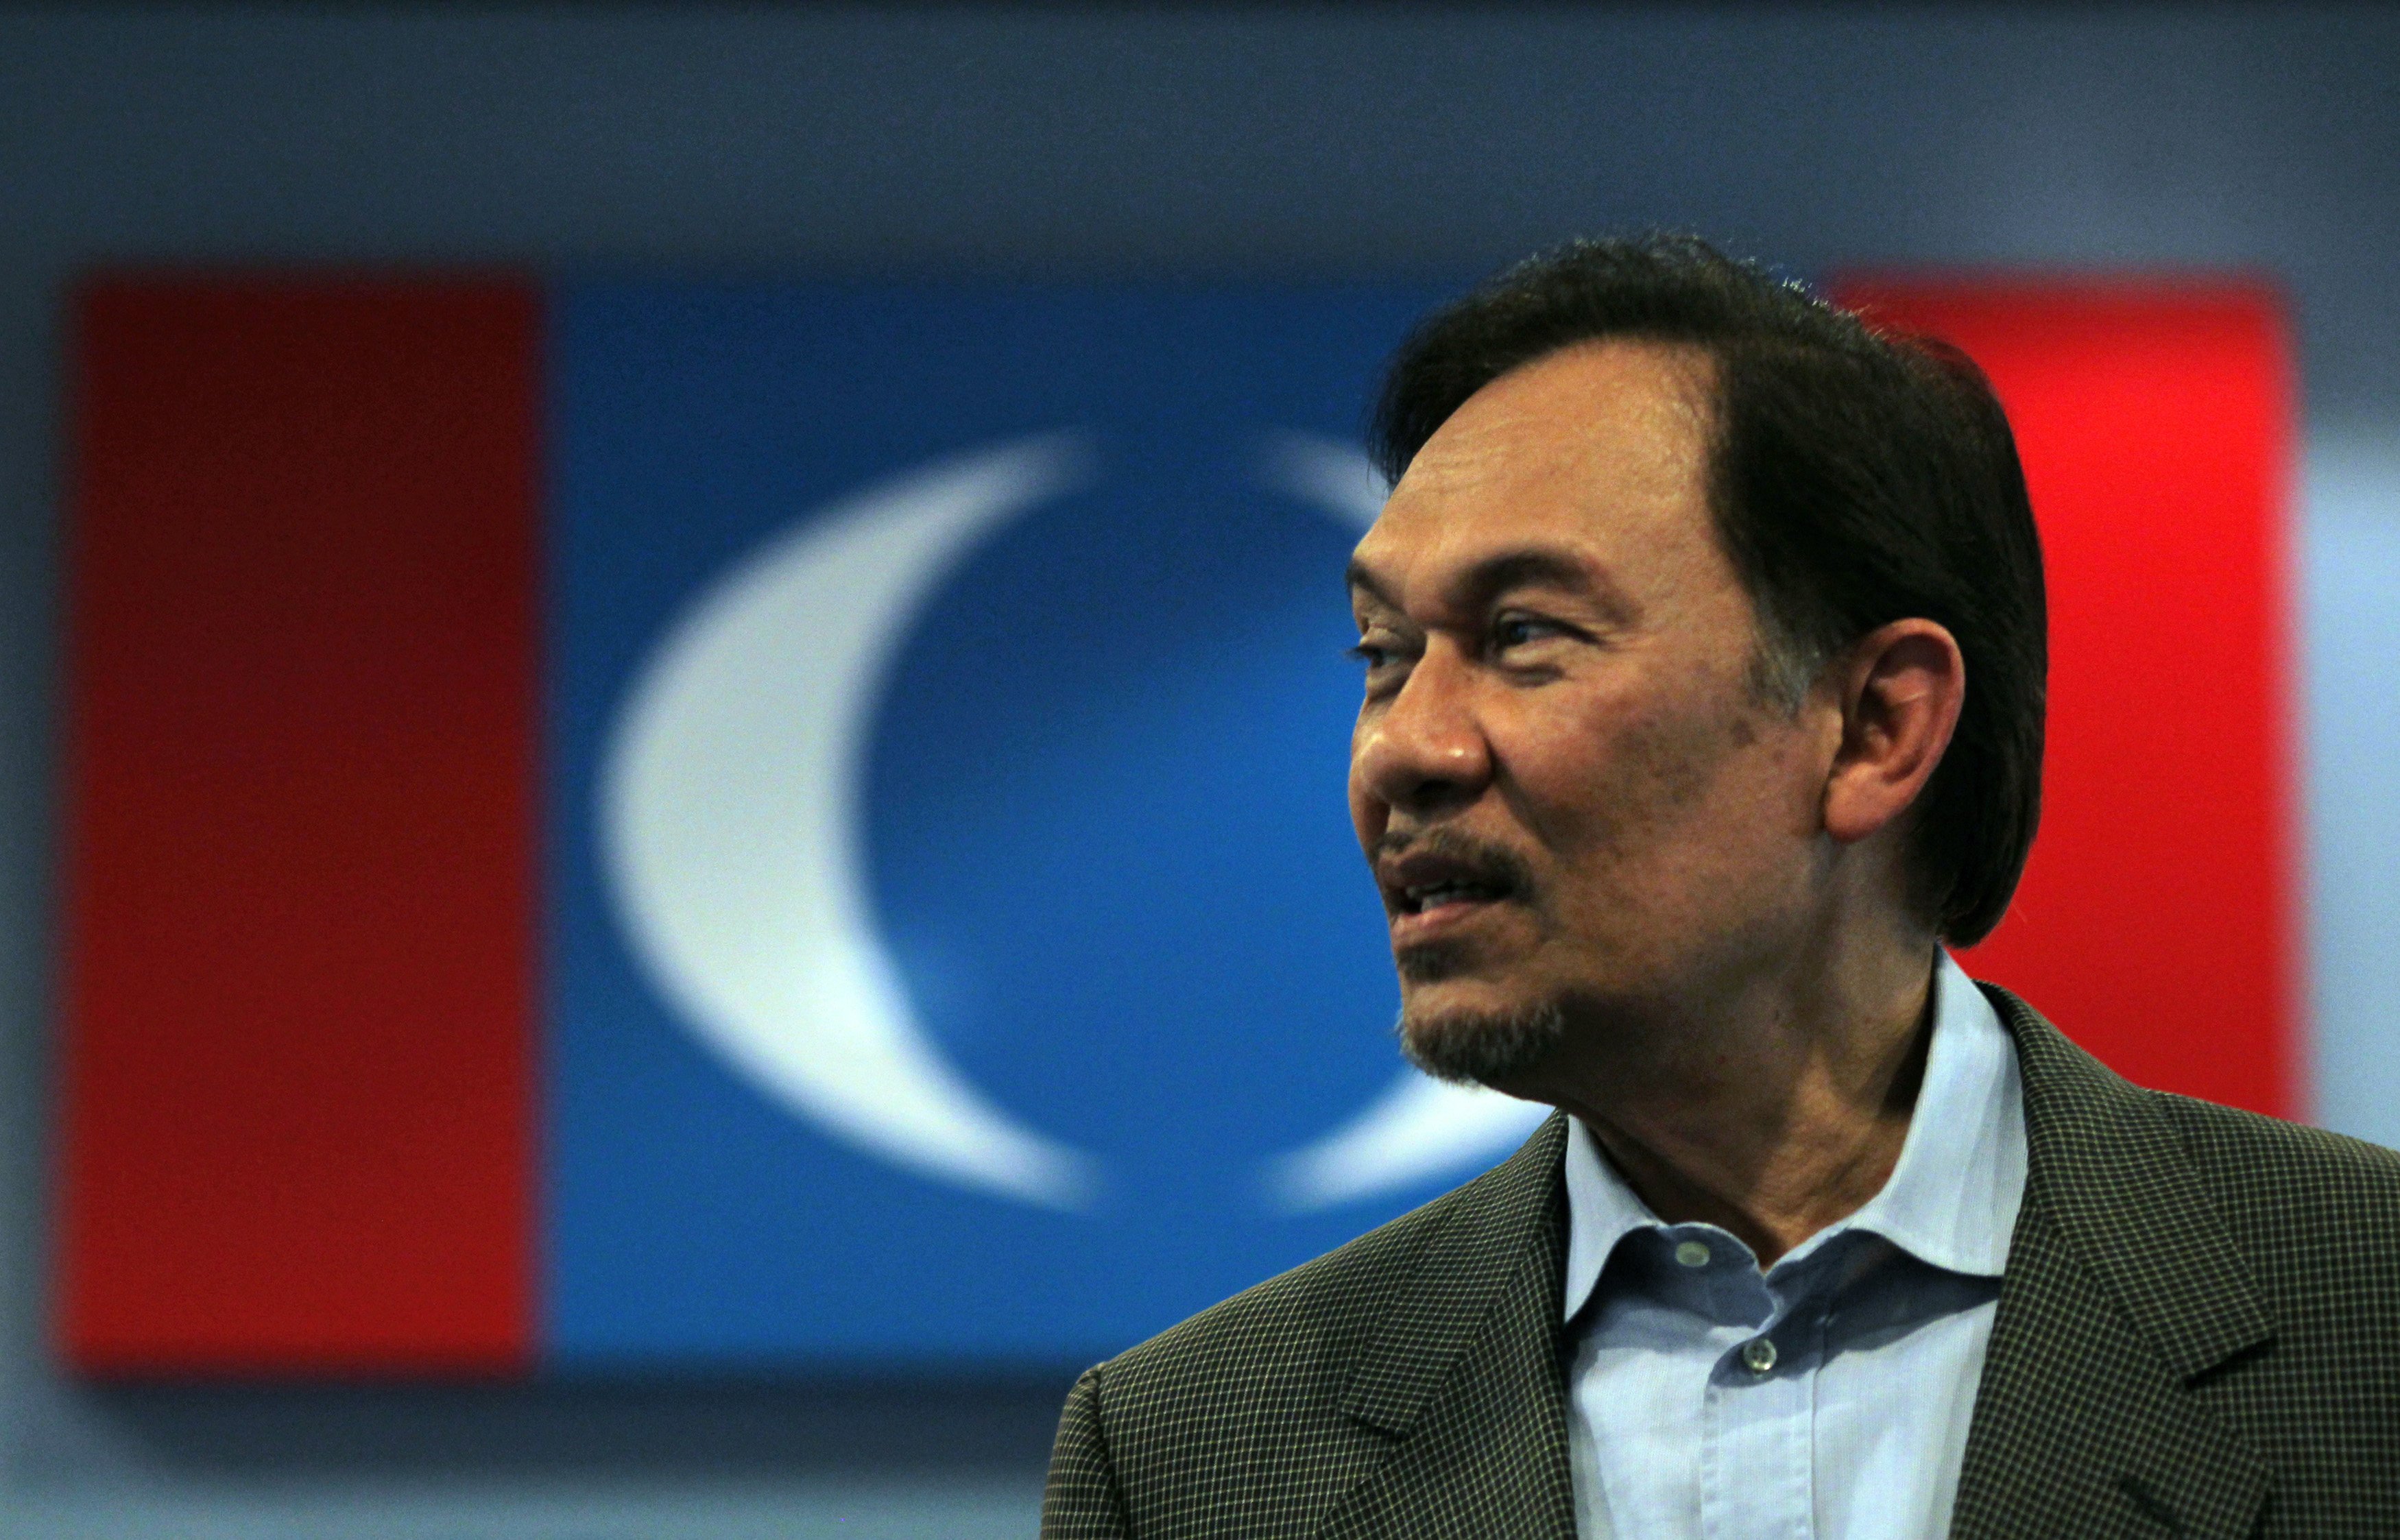 Anwar Ibrahim visits the Pakatan Rakyat Keadilan (PKR) headquarters in Kuala Lumpur for a press conference in 2012. Photo: AFP